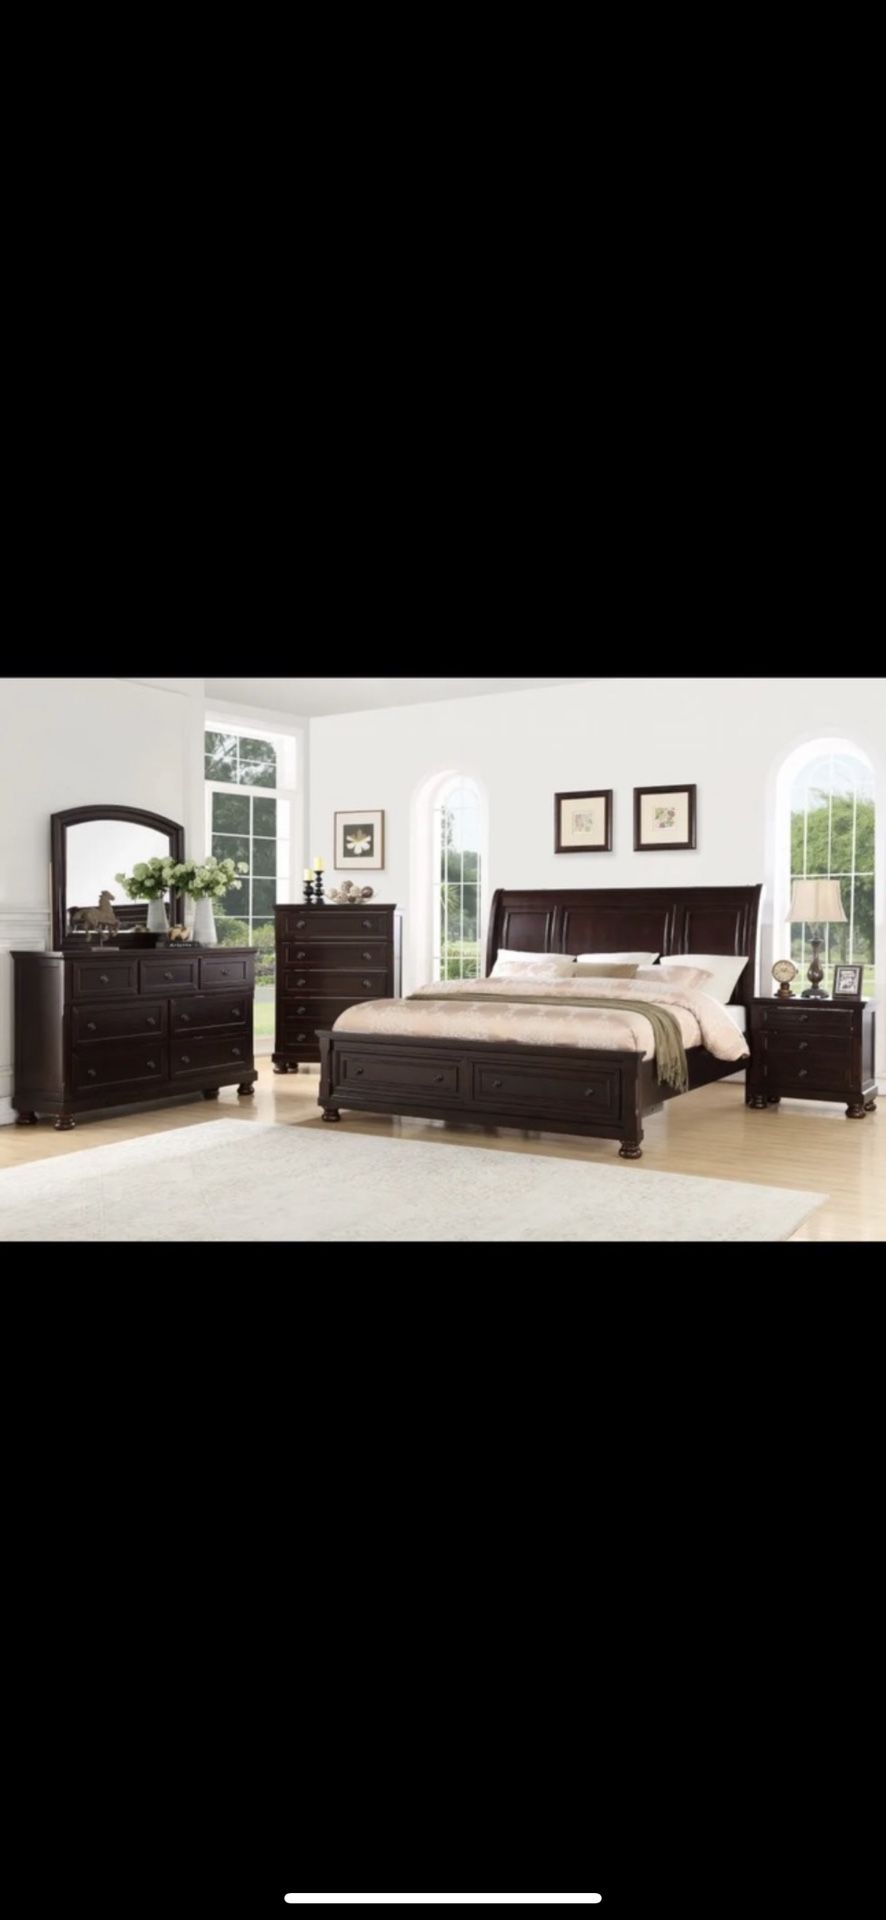 Brand New Complete Bedroom Set for $1699!!!